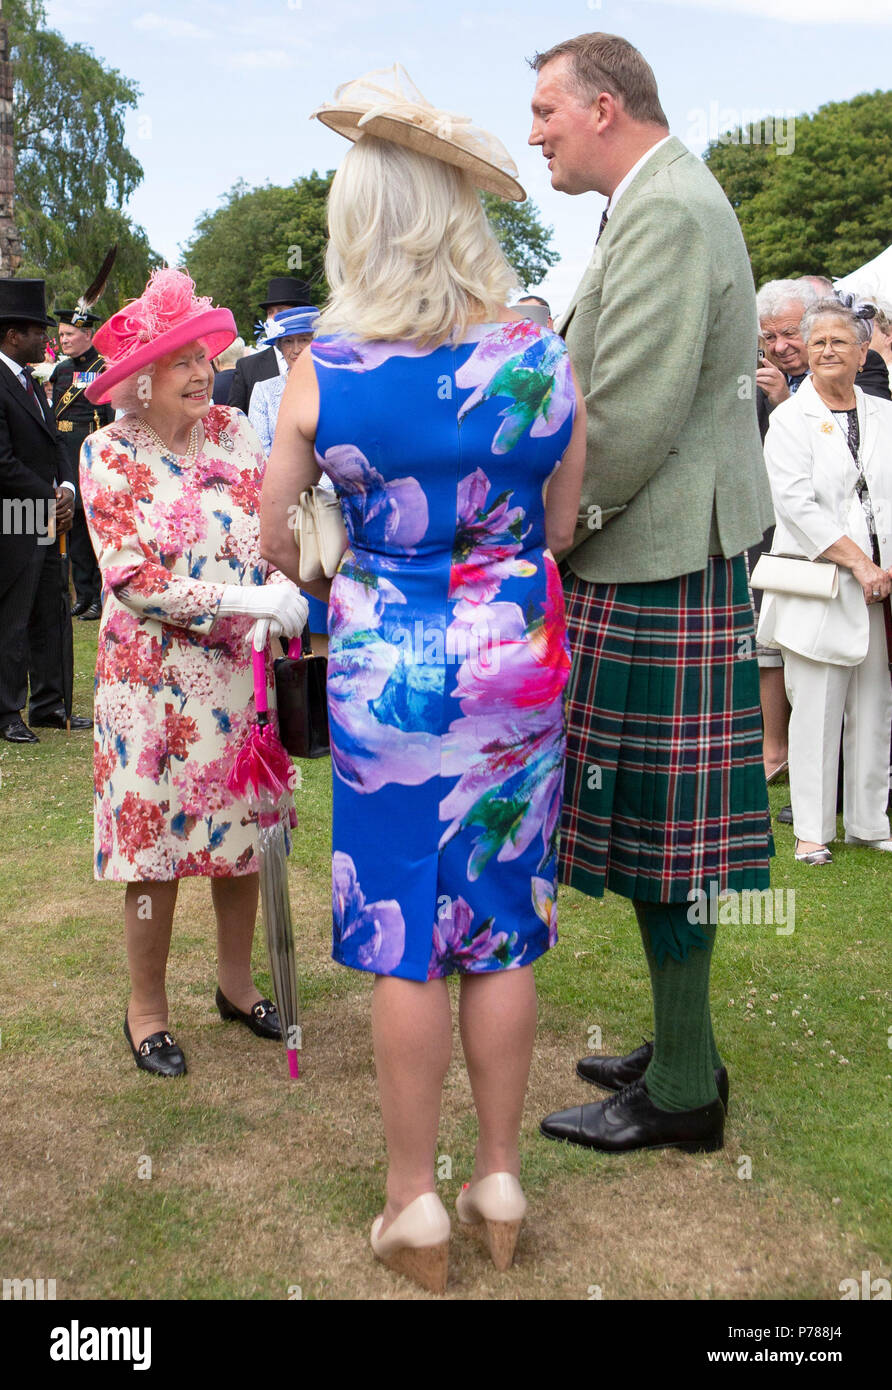 Queen Elizabeth II soddisfa ex Scozia ruby player Doddie Weir e sua moglie Kathy Weir durante una festa in giardino presso il Palazzo di Holyroodhouse di Edimburgo. Foto Stock